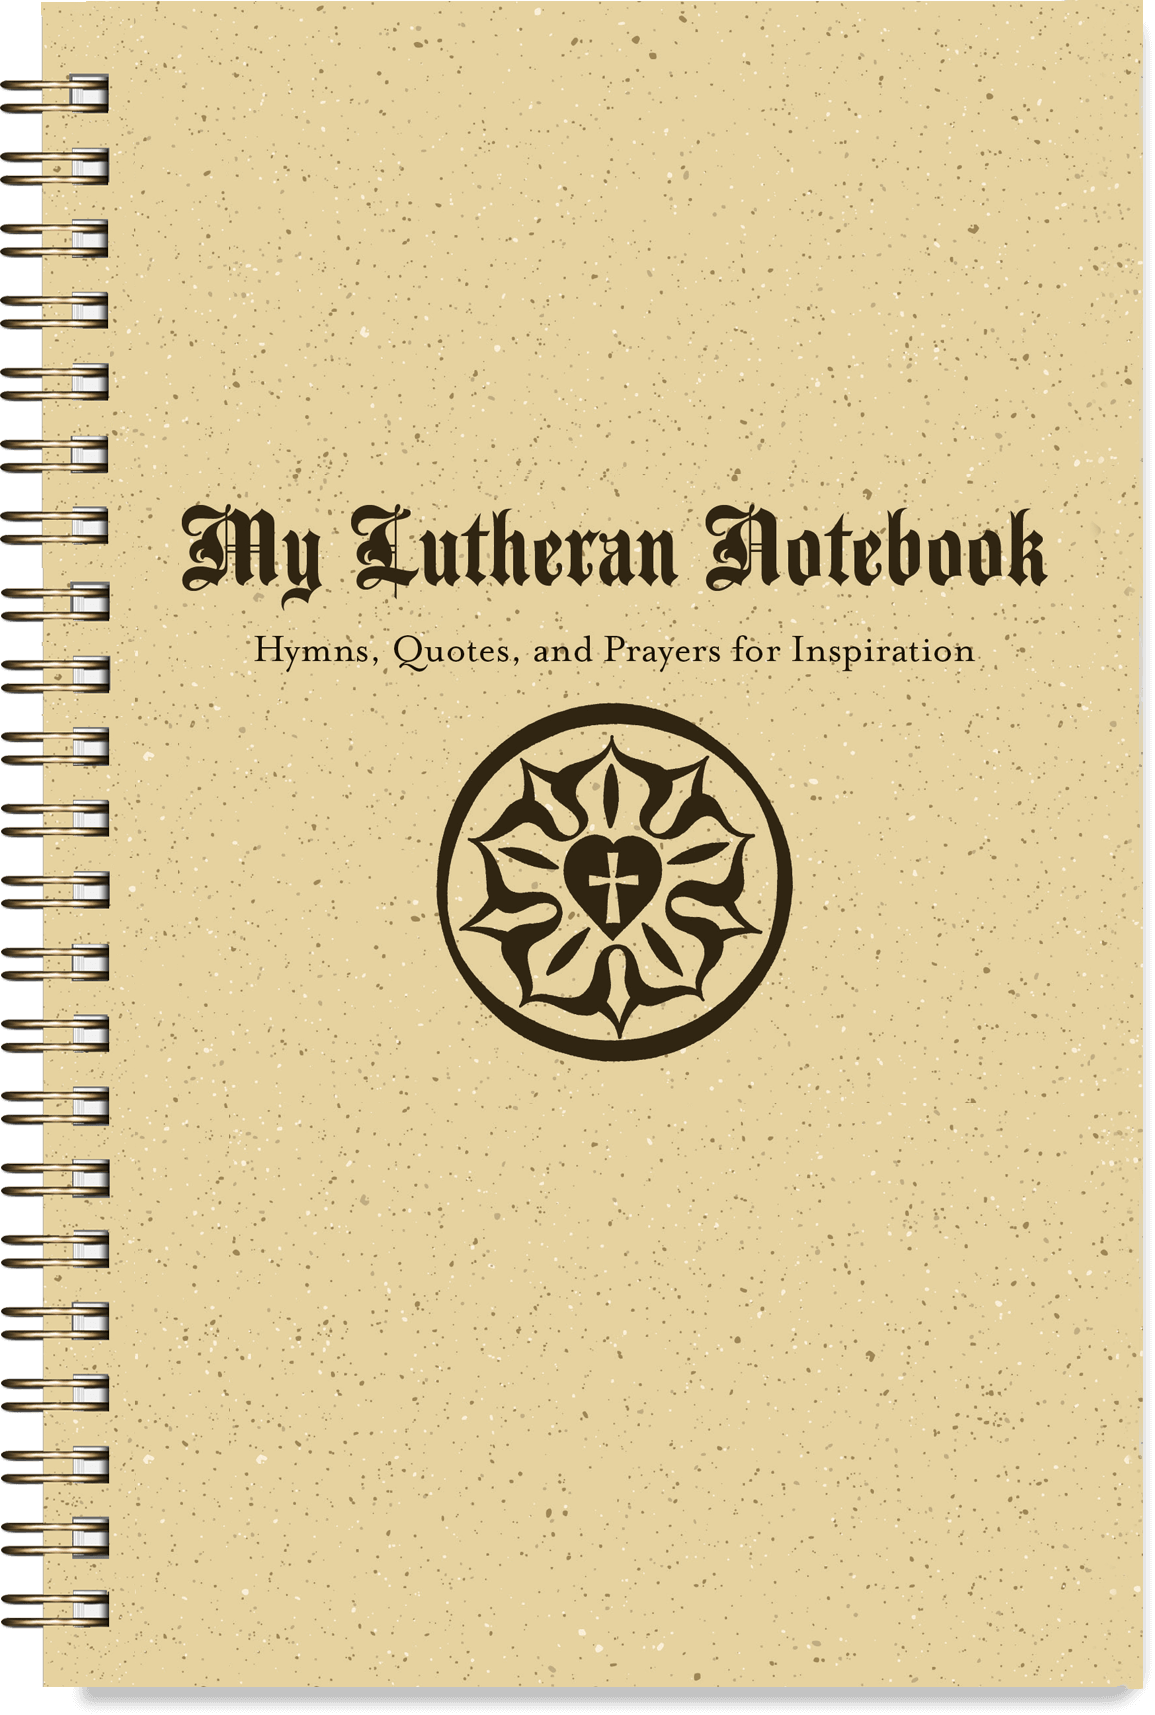 My Lutheran Notebook